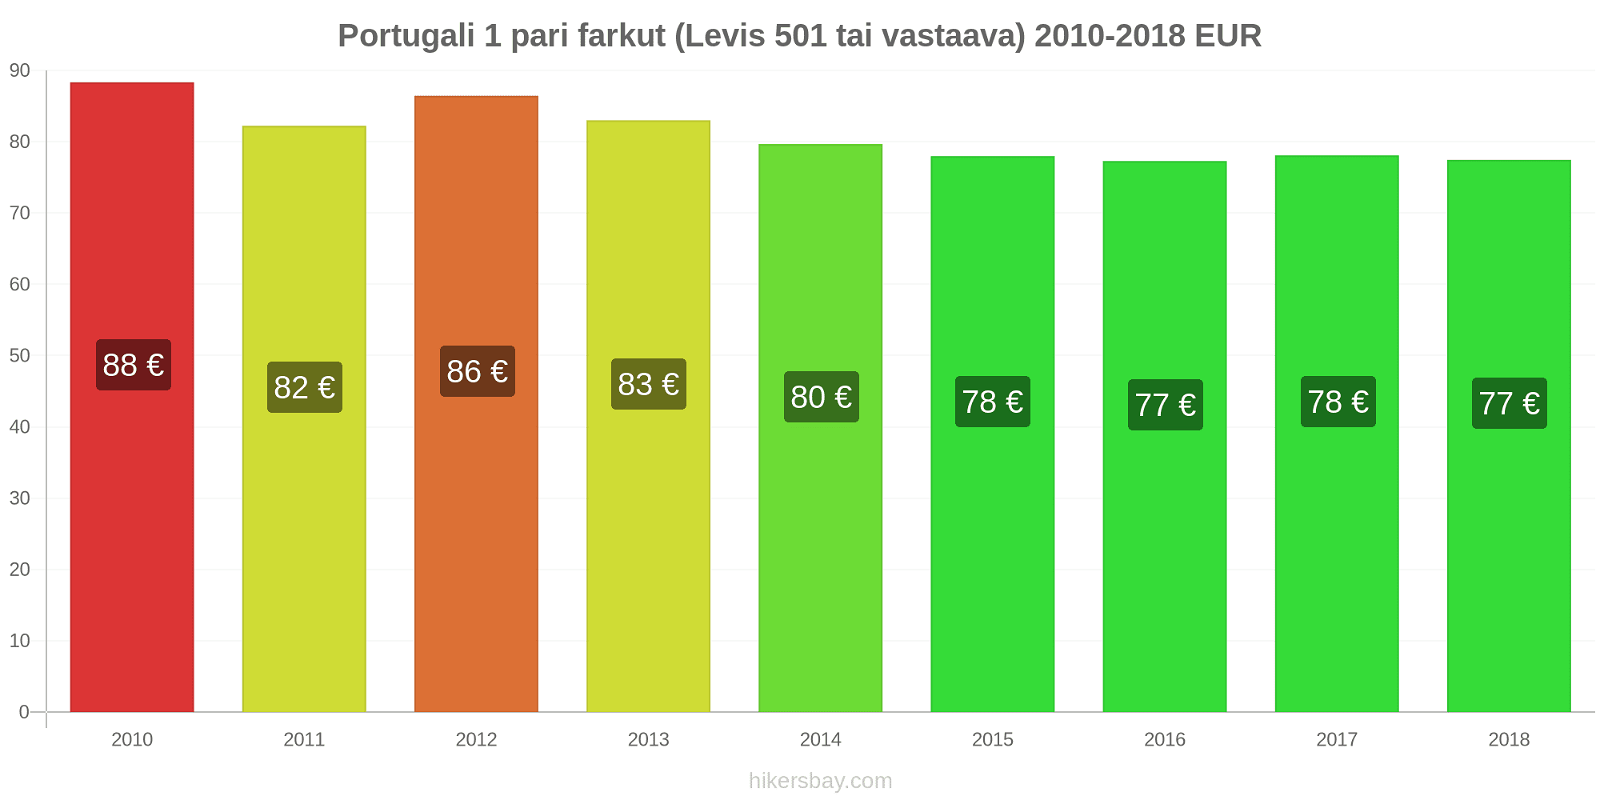 Portugali hintojen muutokset 1 pari farkut (Levis 501 tai vastaava) hikersbay.com